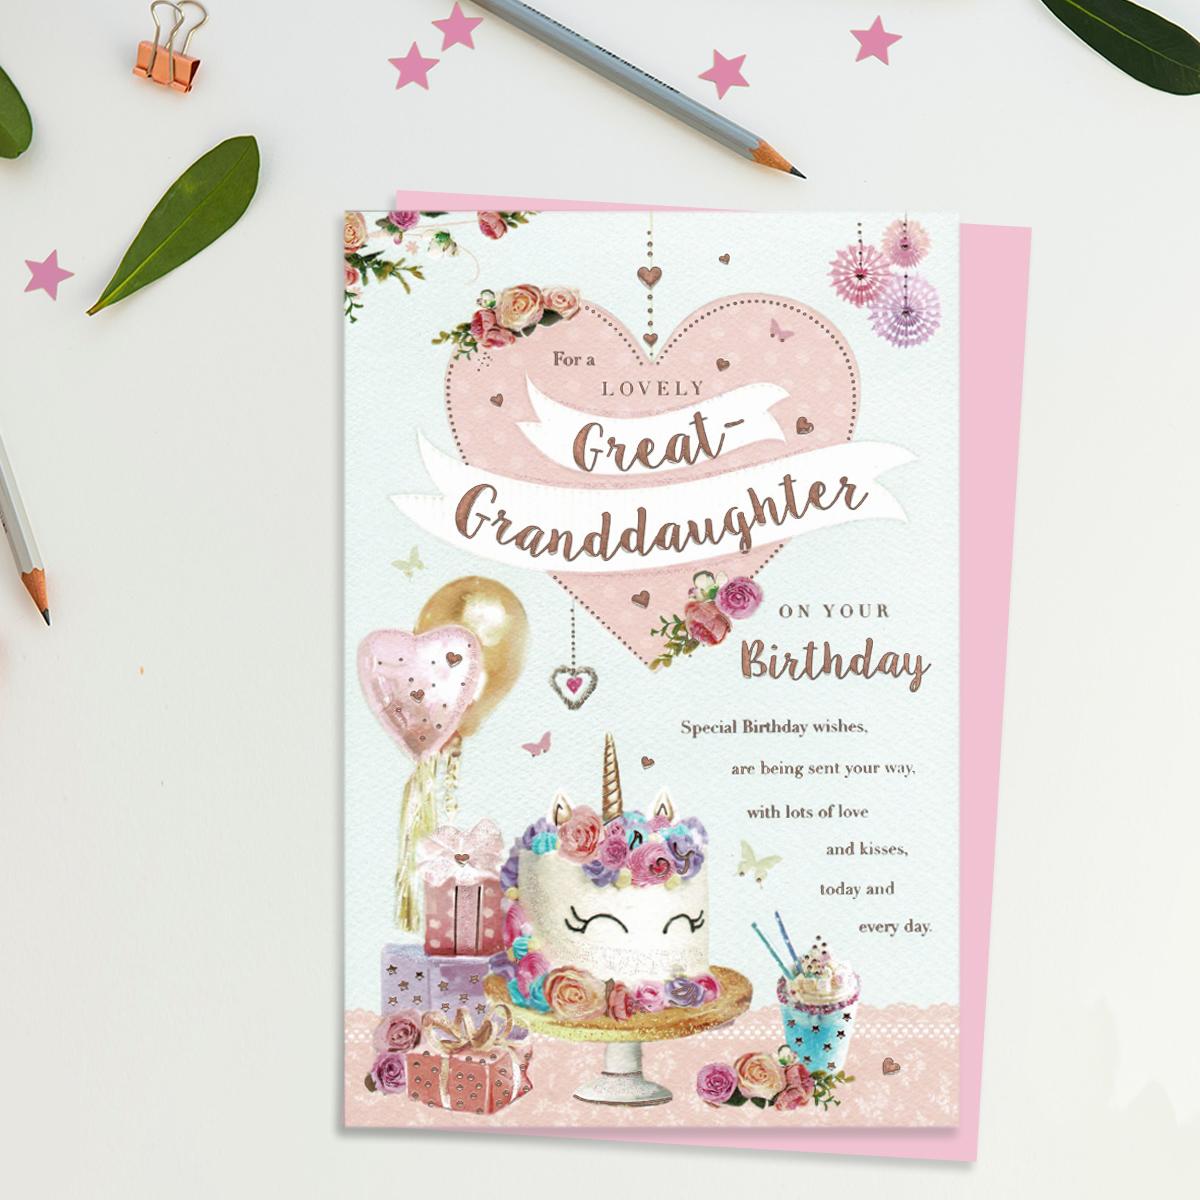 Great Granddaughter Birthday Card Alongside Its Light Pink Envelope